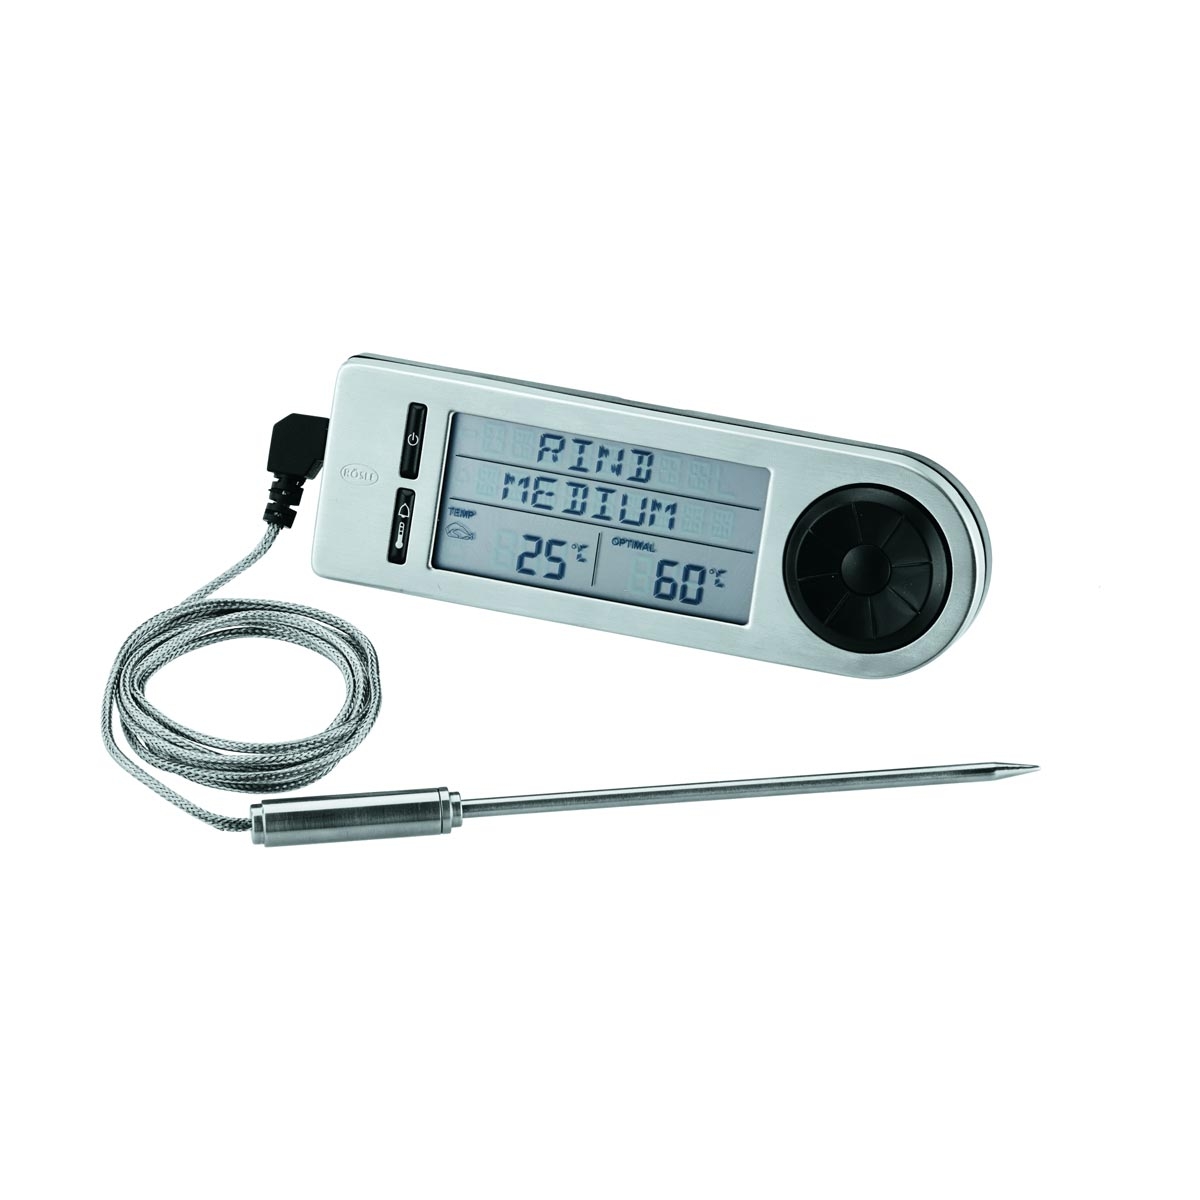 Rösle Bratenthermometer digital inkl. 1 m Kabel